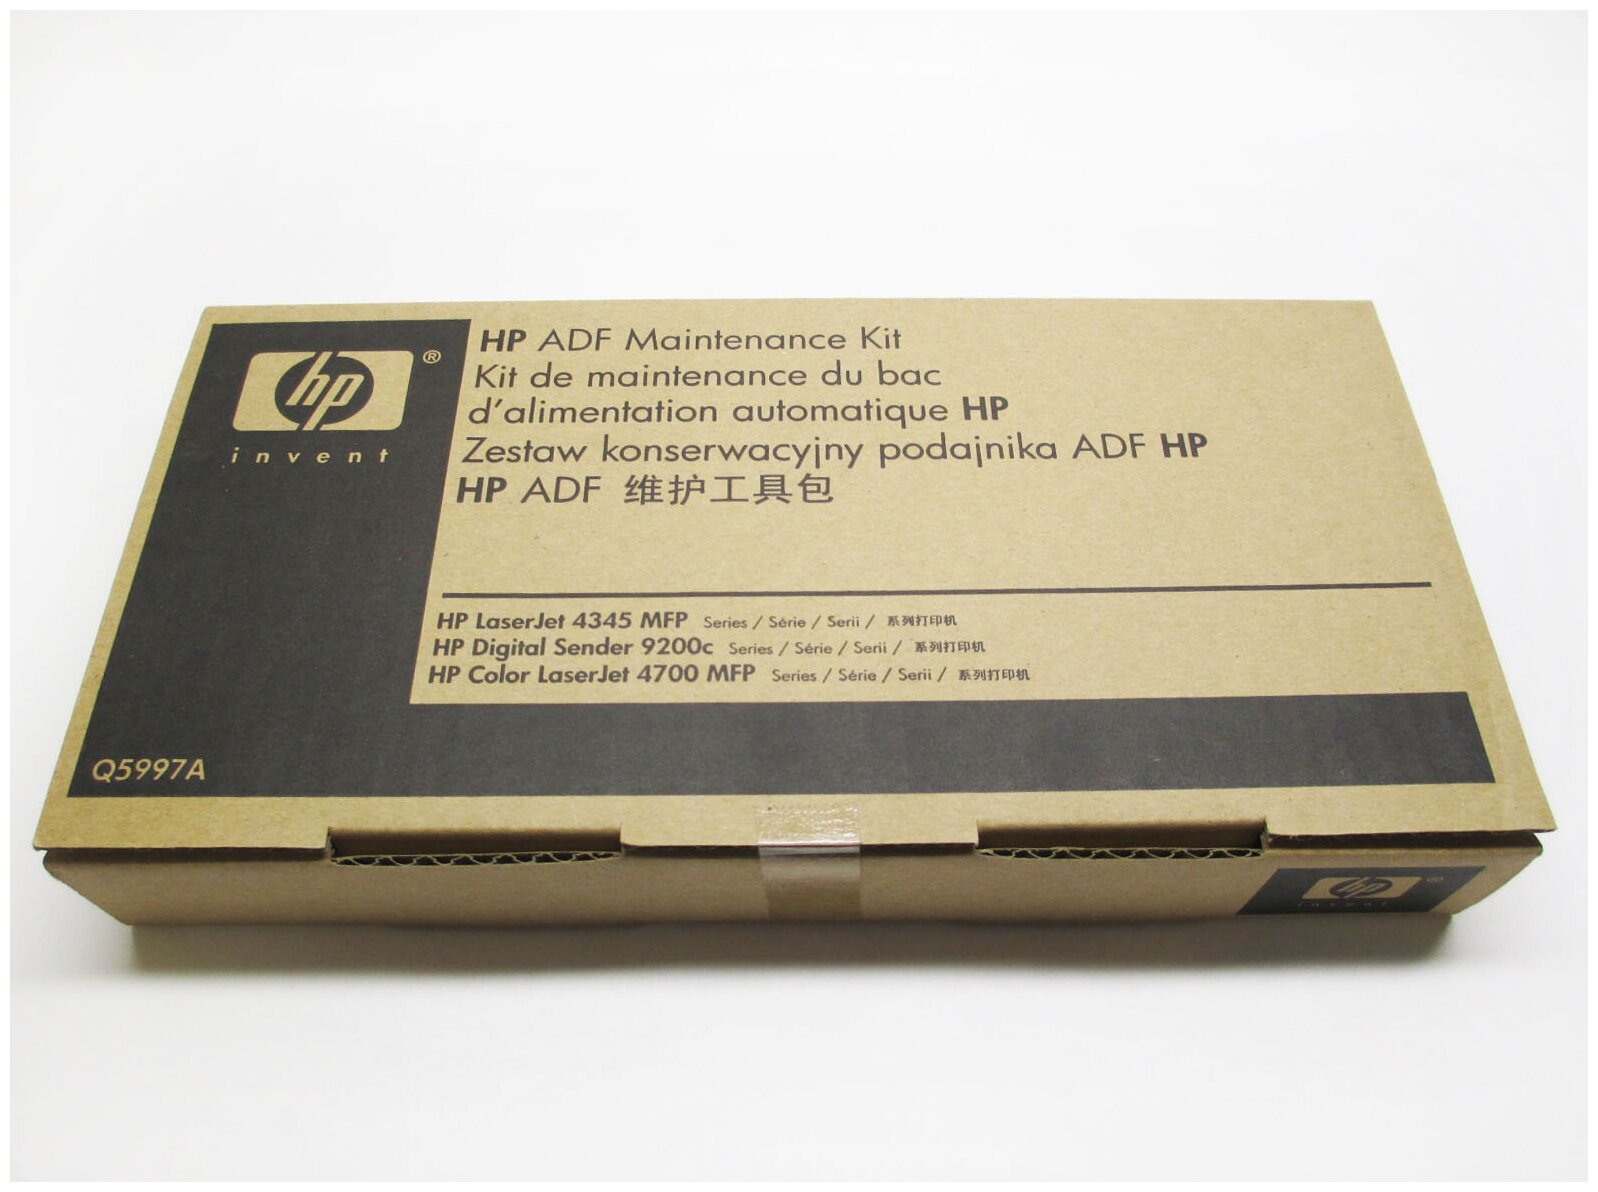 Ремкомплект HP ADF для LJ 4345, 9200c, CLJ 4730, Q5997-67901, Q5997A, оригинал